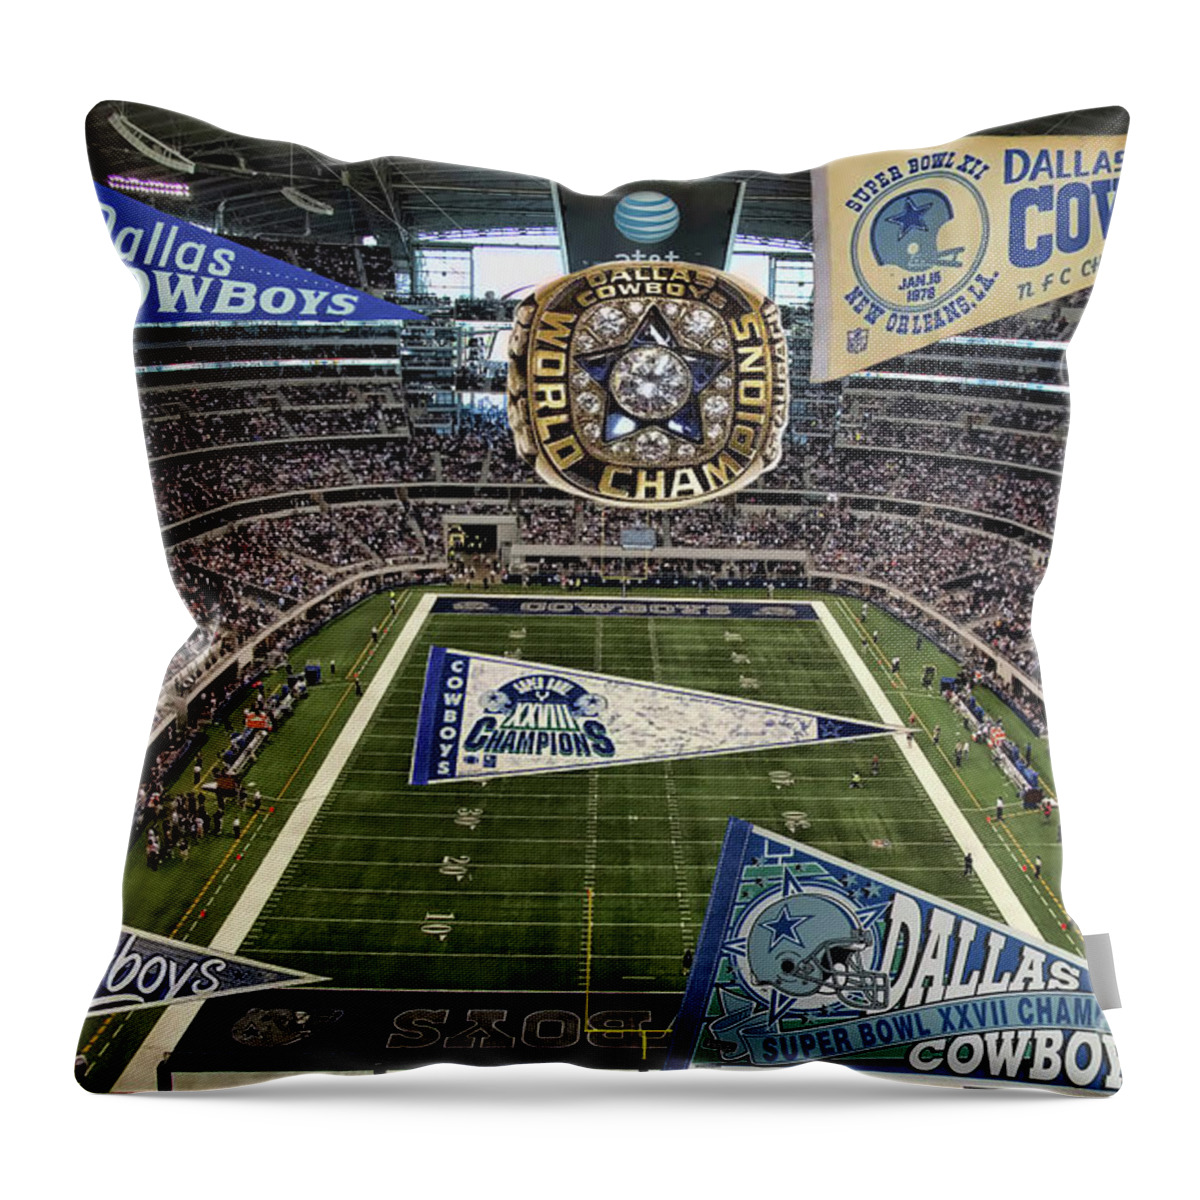 Cowboys Throw Pillow featuring the photograph Cowboys Super Bowls by Steven Parker